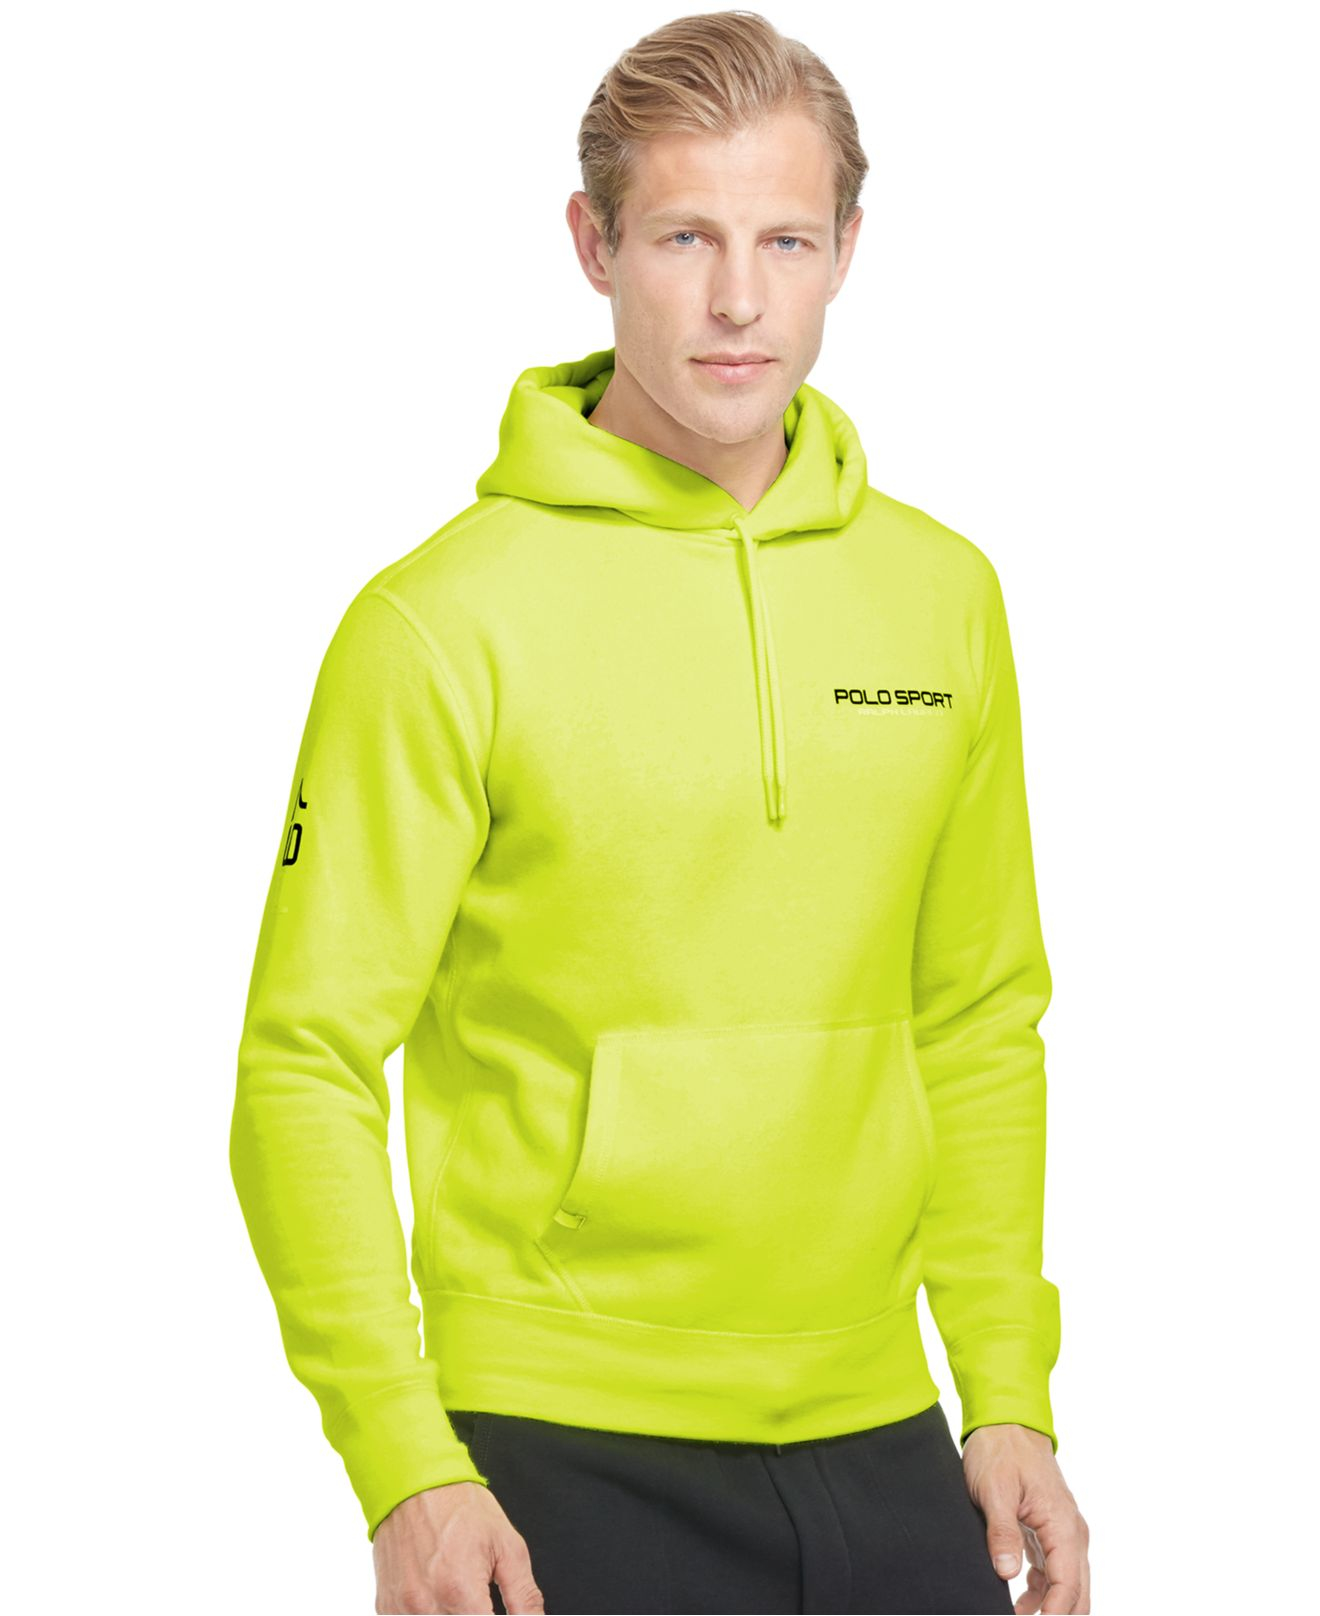 Polo Ralph Lauren Polo Sport Neon Fleece Pullover Hoodie in Yellow for